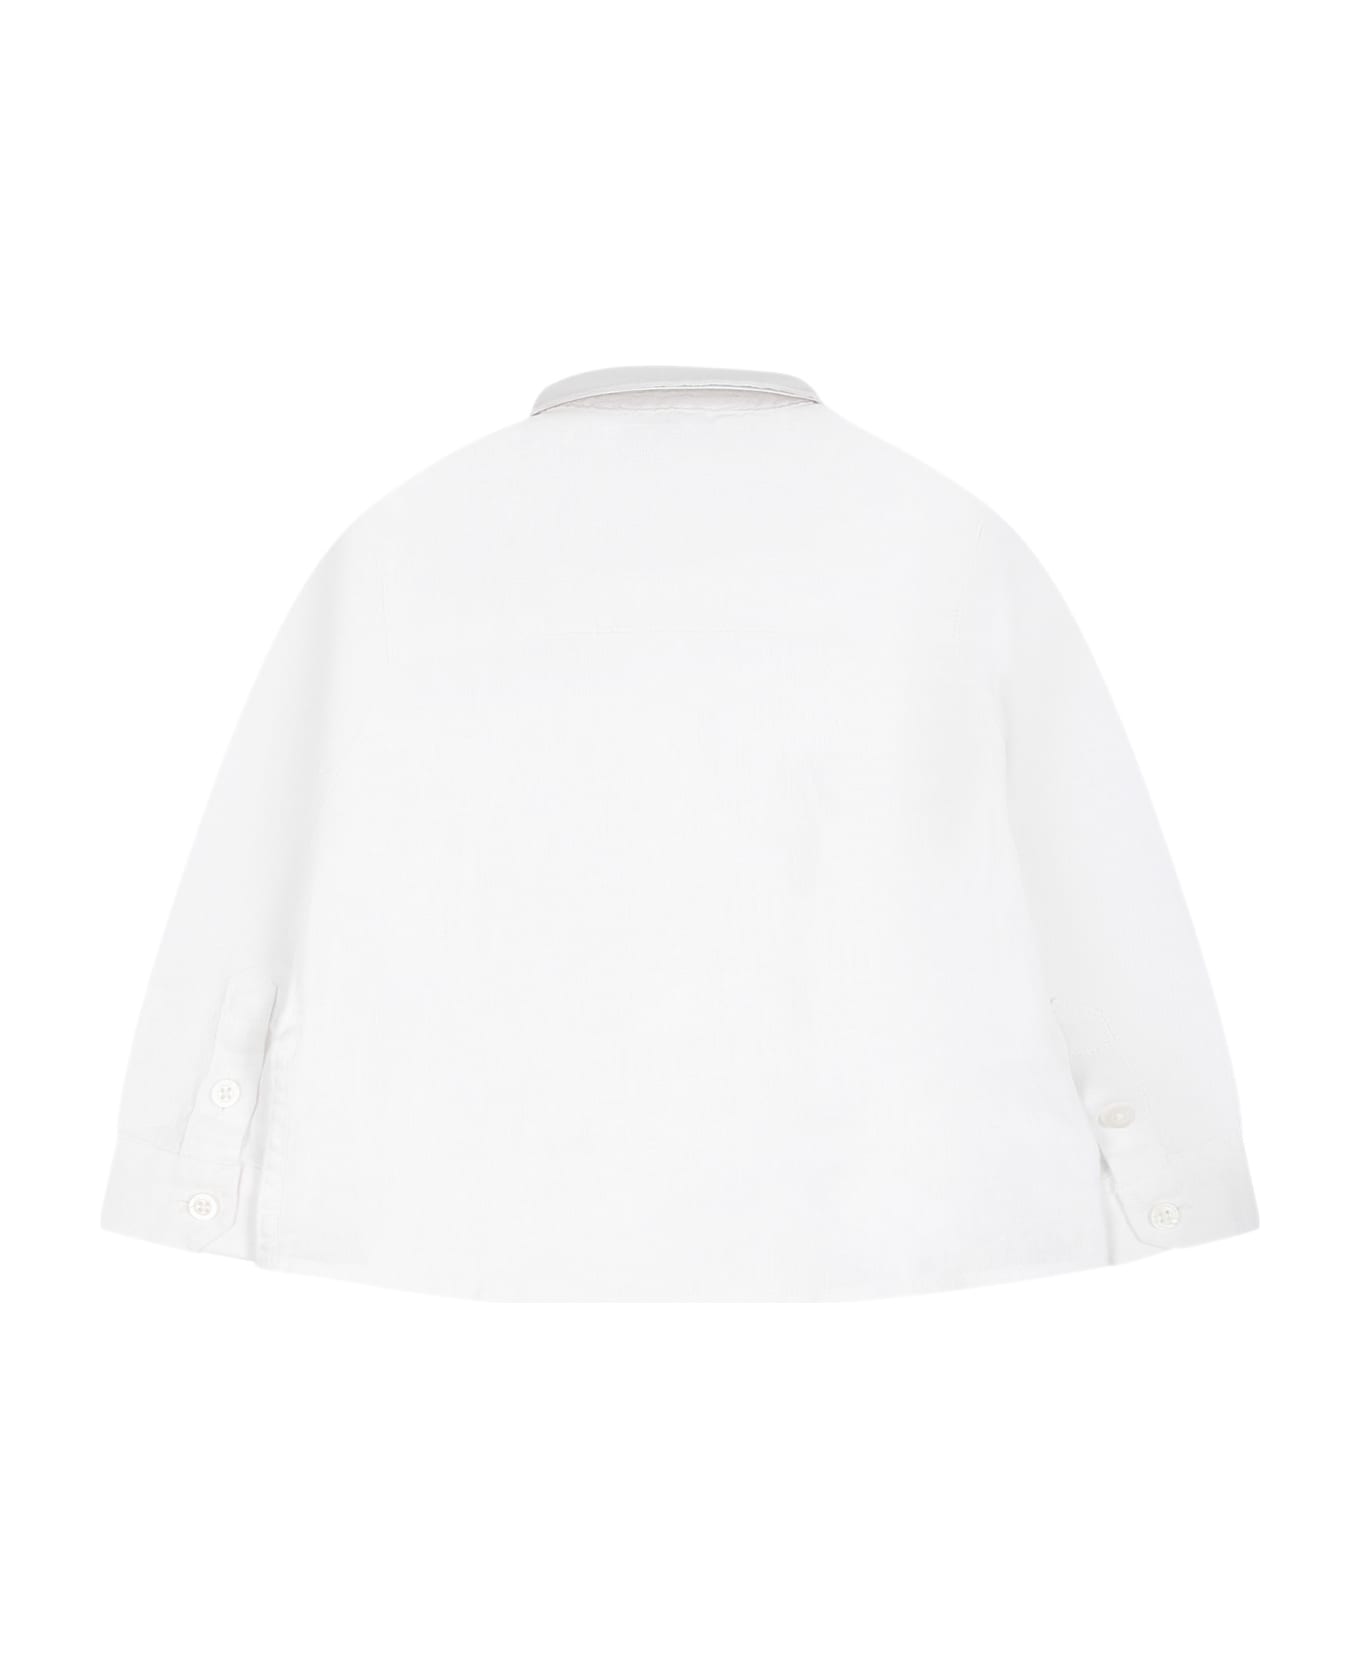 Emporio Armani White Shirt For Baby Boy With Iconic Eagle - White シャツ